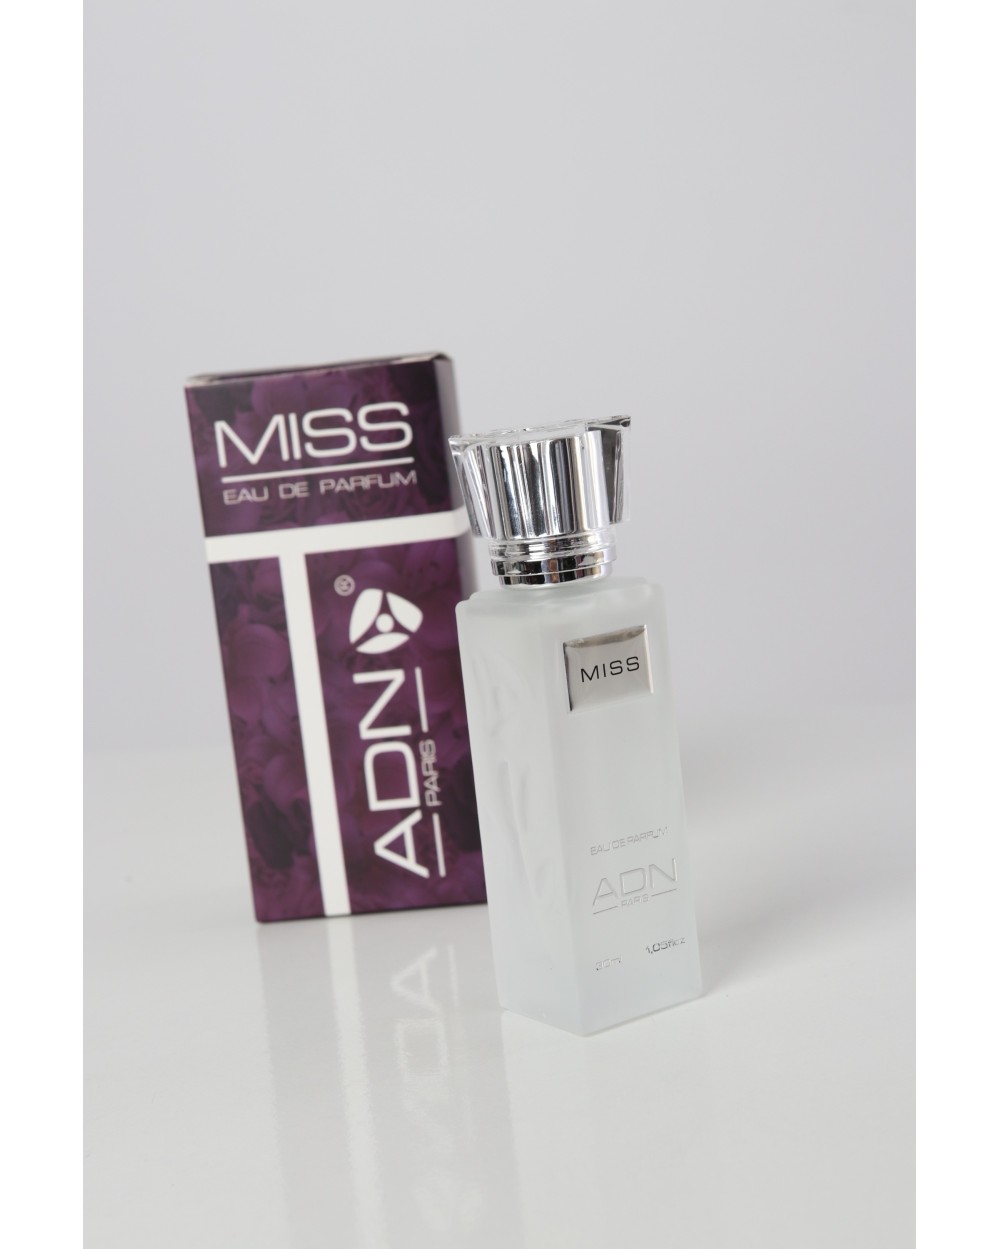 Perfume Miss ADN Paris